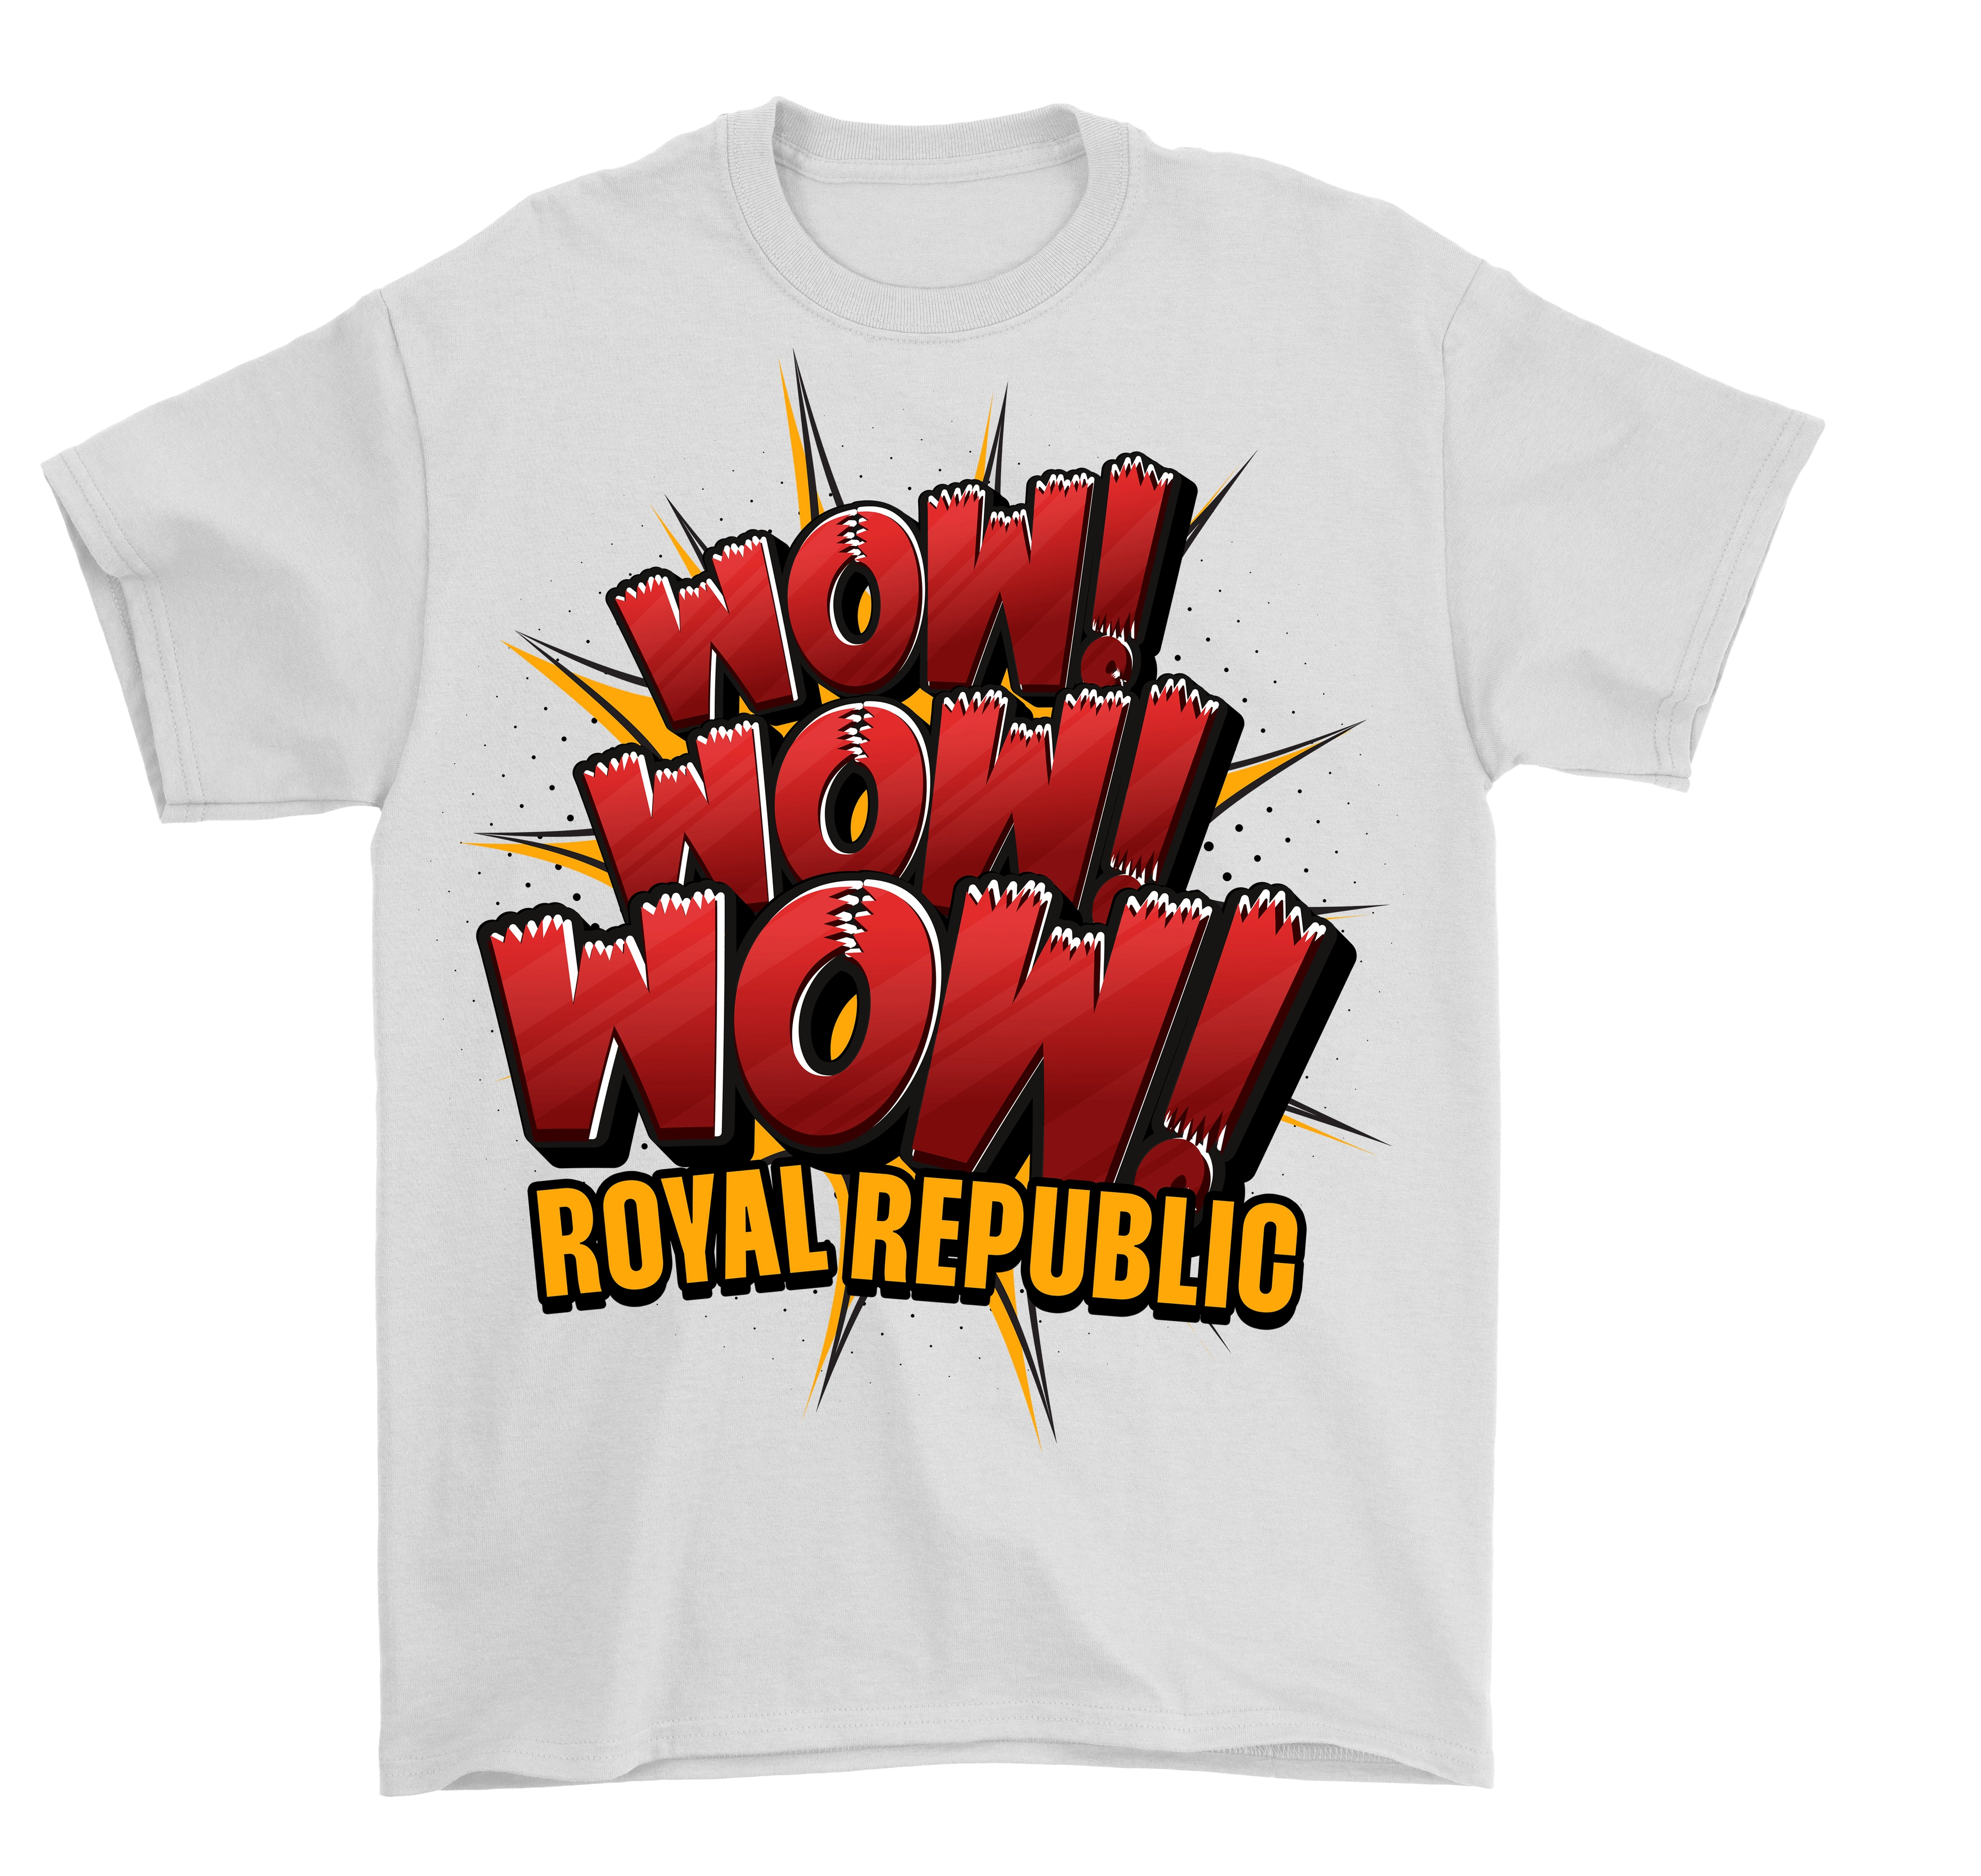 ROYAL REPUBLIC - Wow! Wow! Wow! [T-SHIRT]